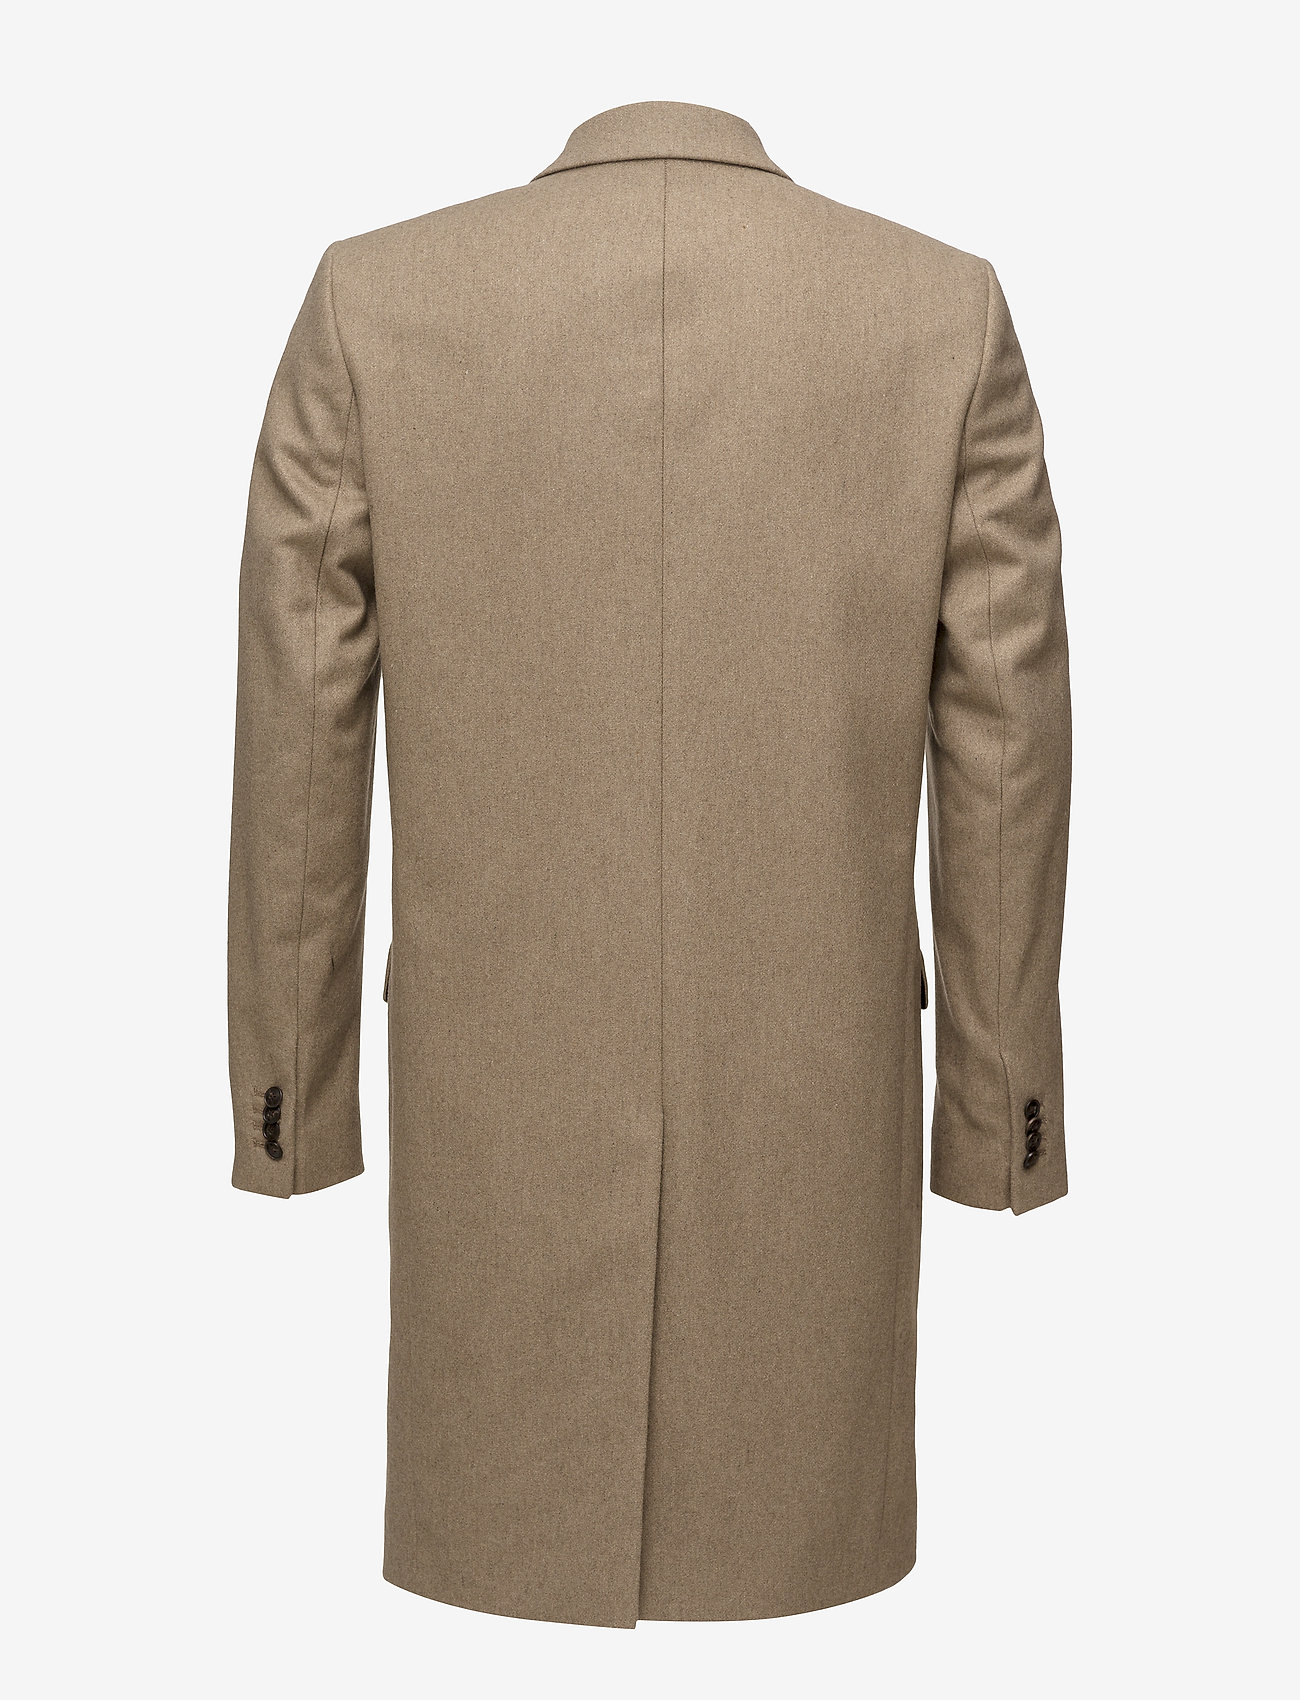 JUNK de LUXE - Tailored wool coat - sand mel - 1